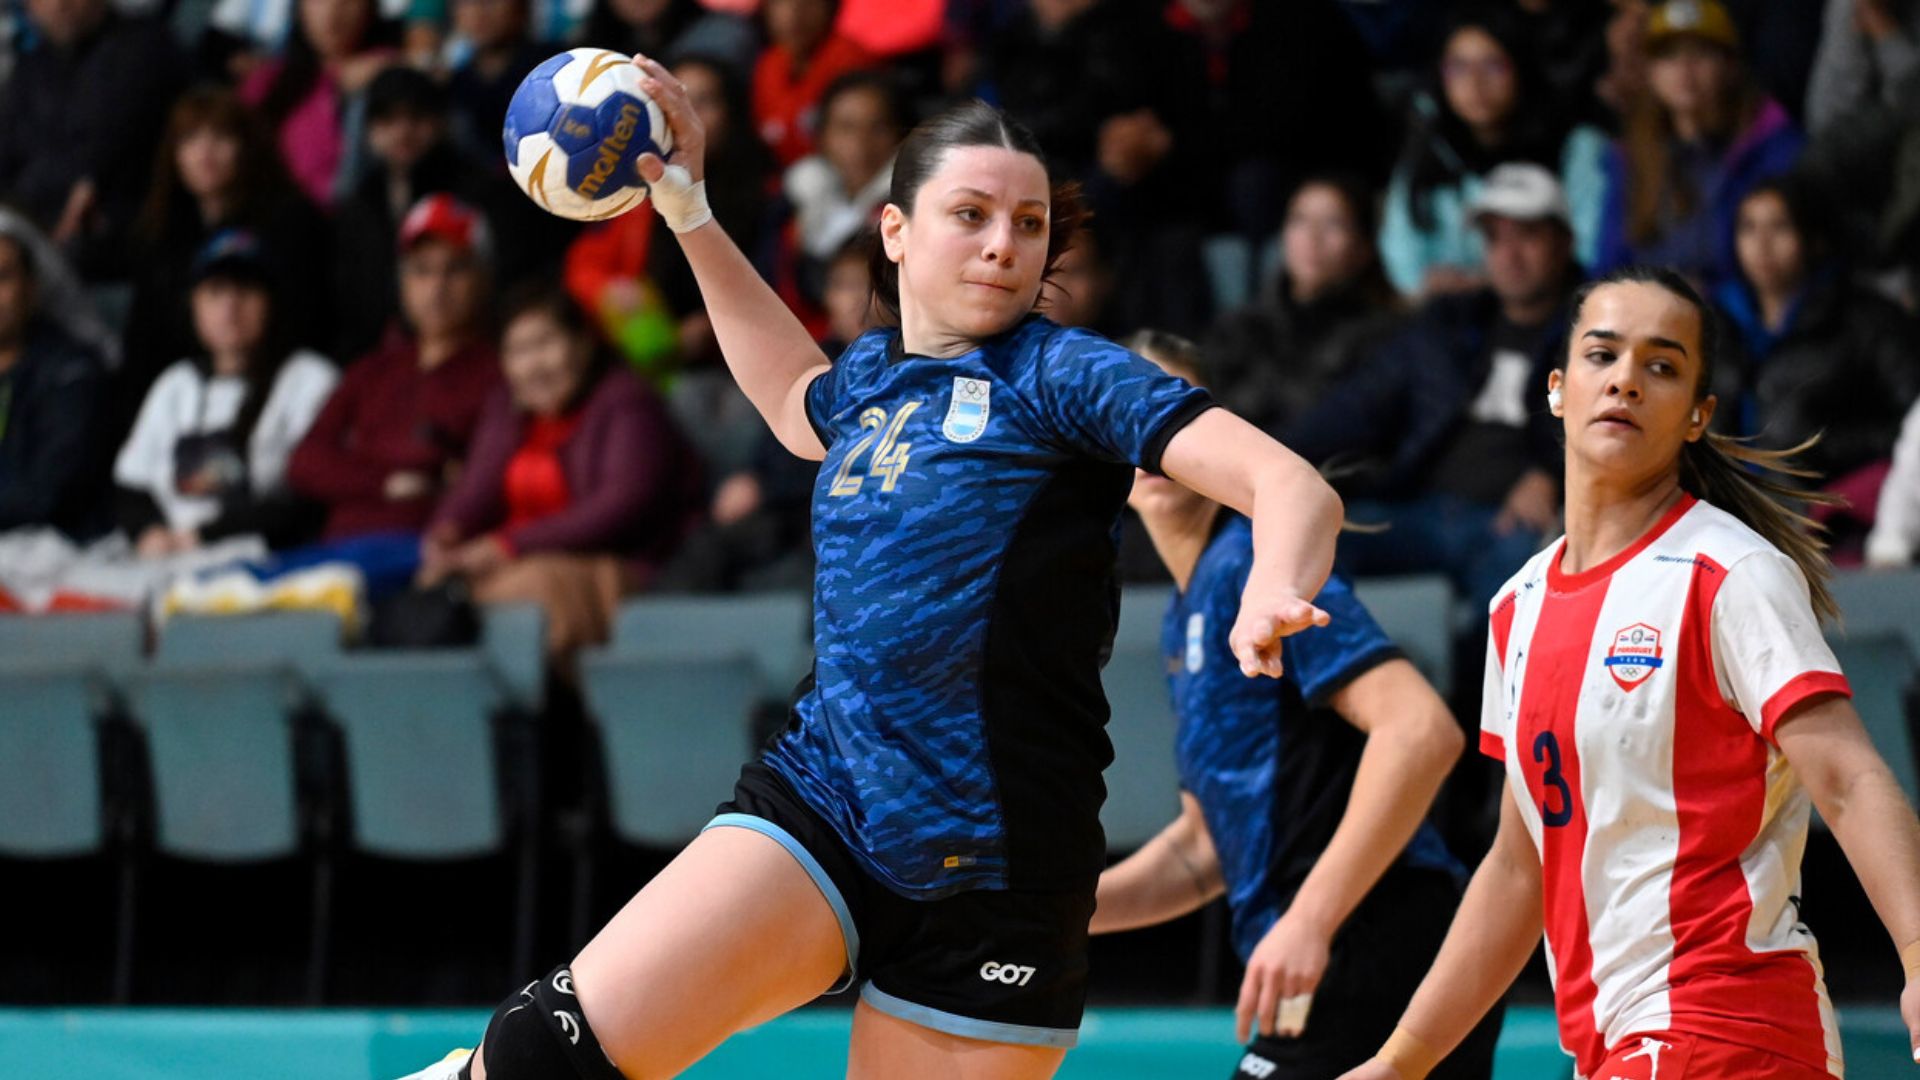 Argentina advances to the finals of female’s handball